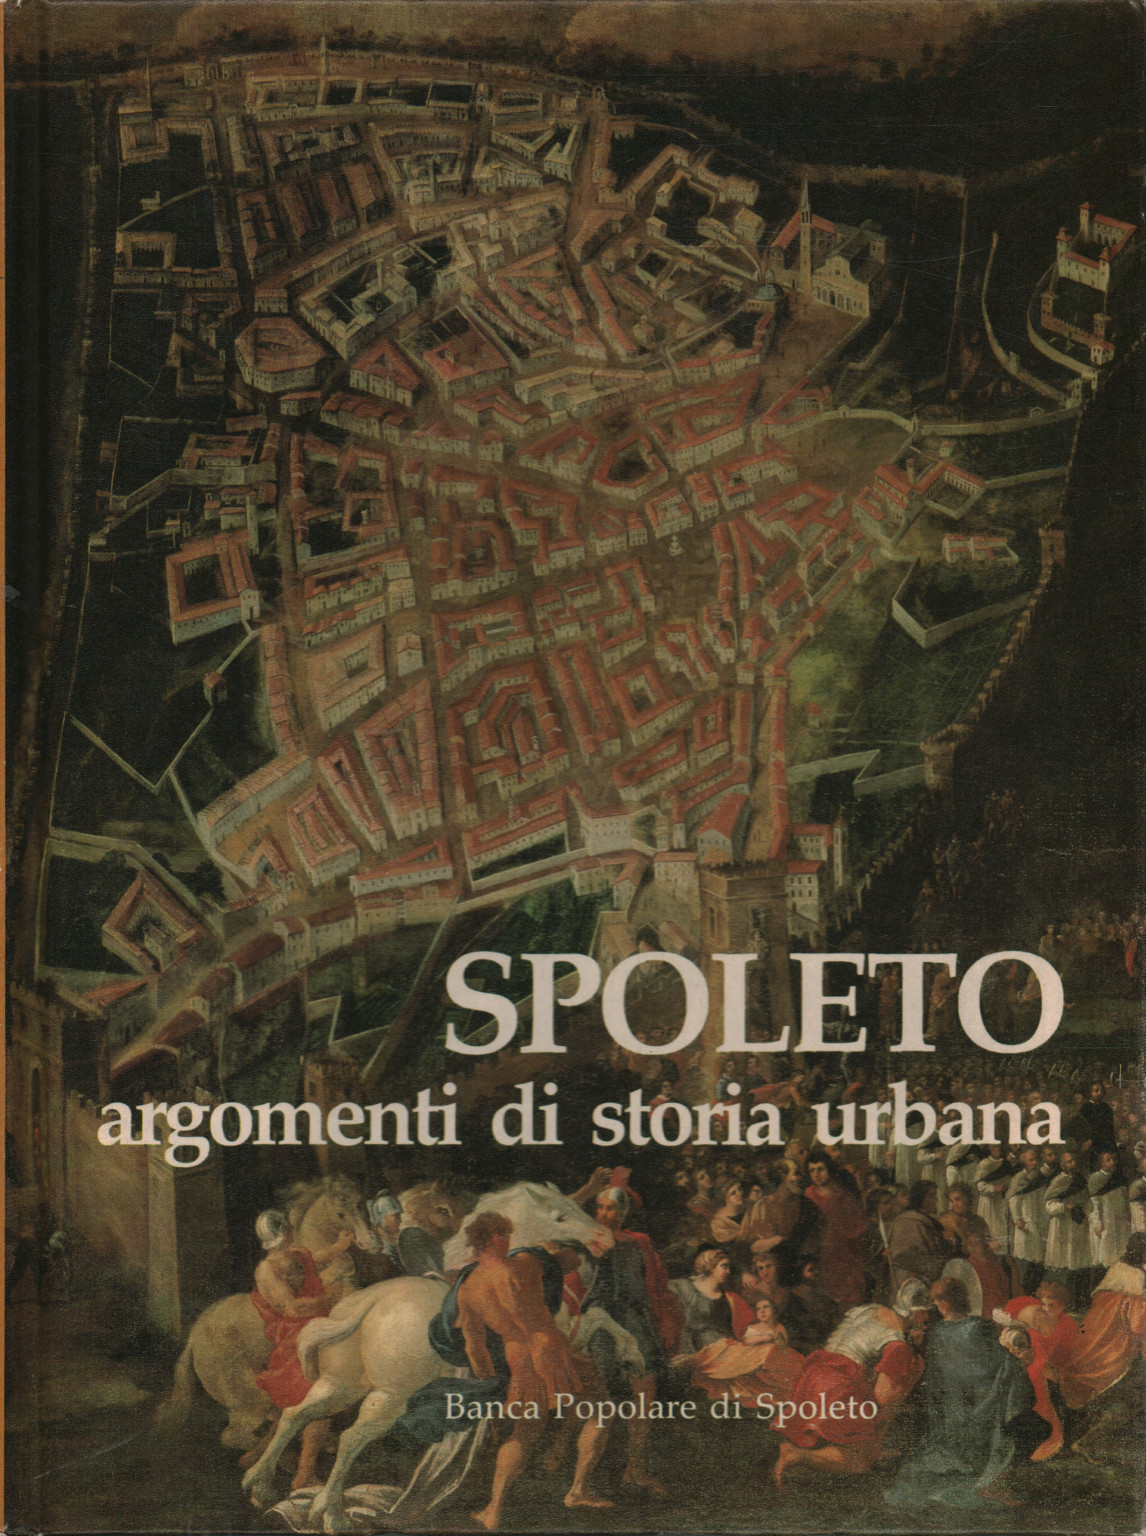 Spoleto sujets d'histoire urbaine, Guglielmo De Angelis d'Ossat Bruno Toscano